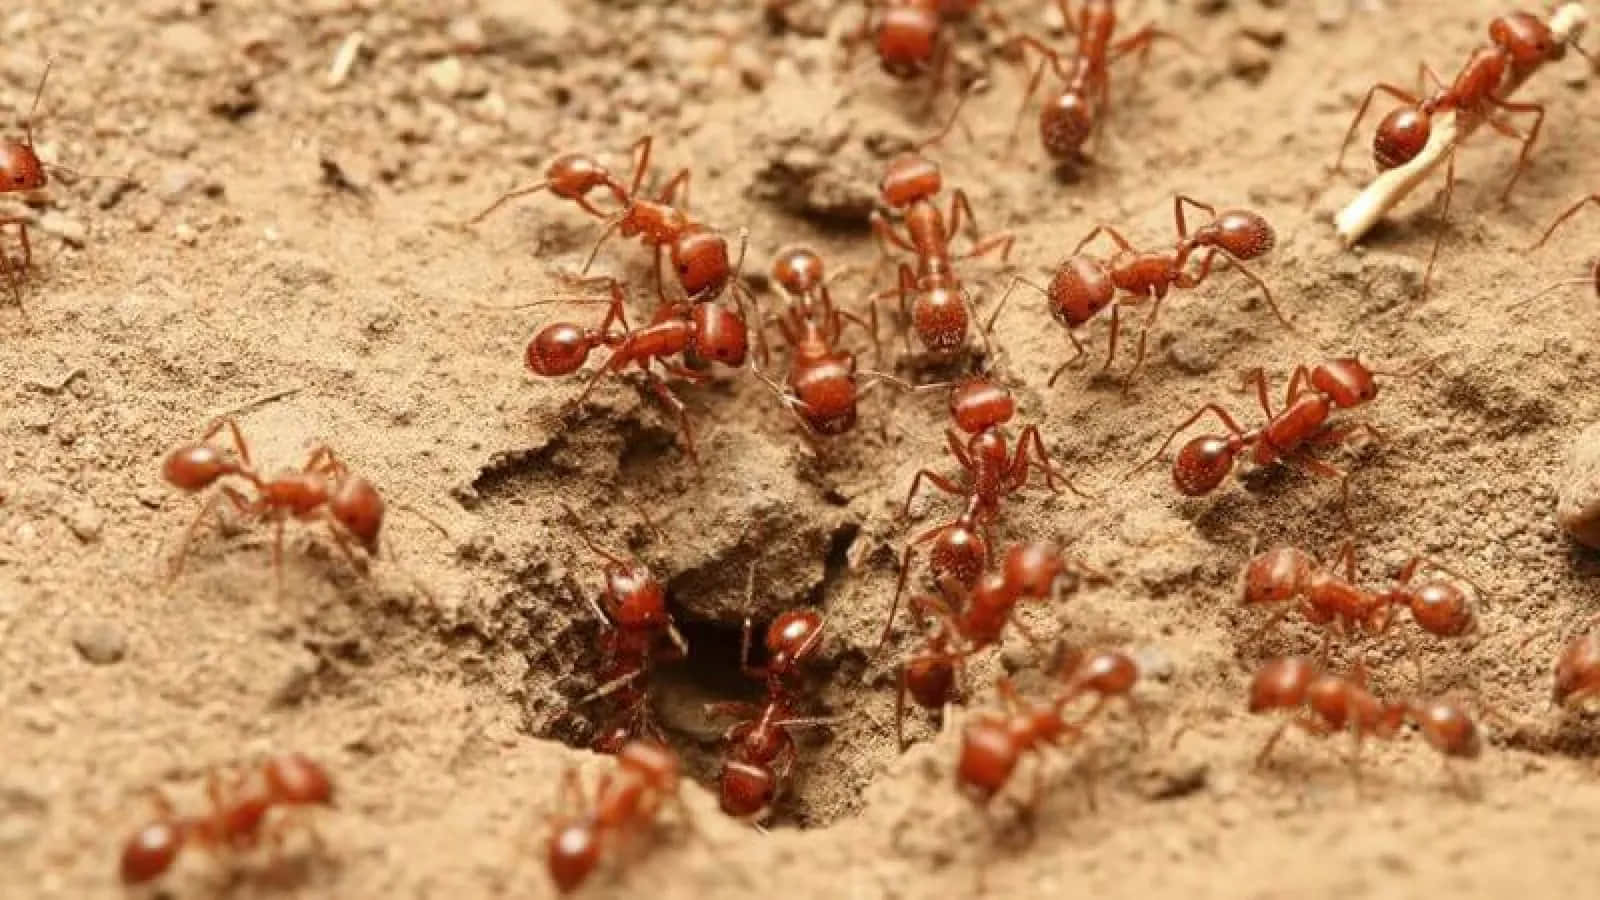 Fire Ants Near Anthill.jpg Wallpaper